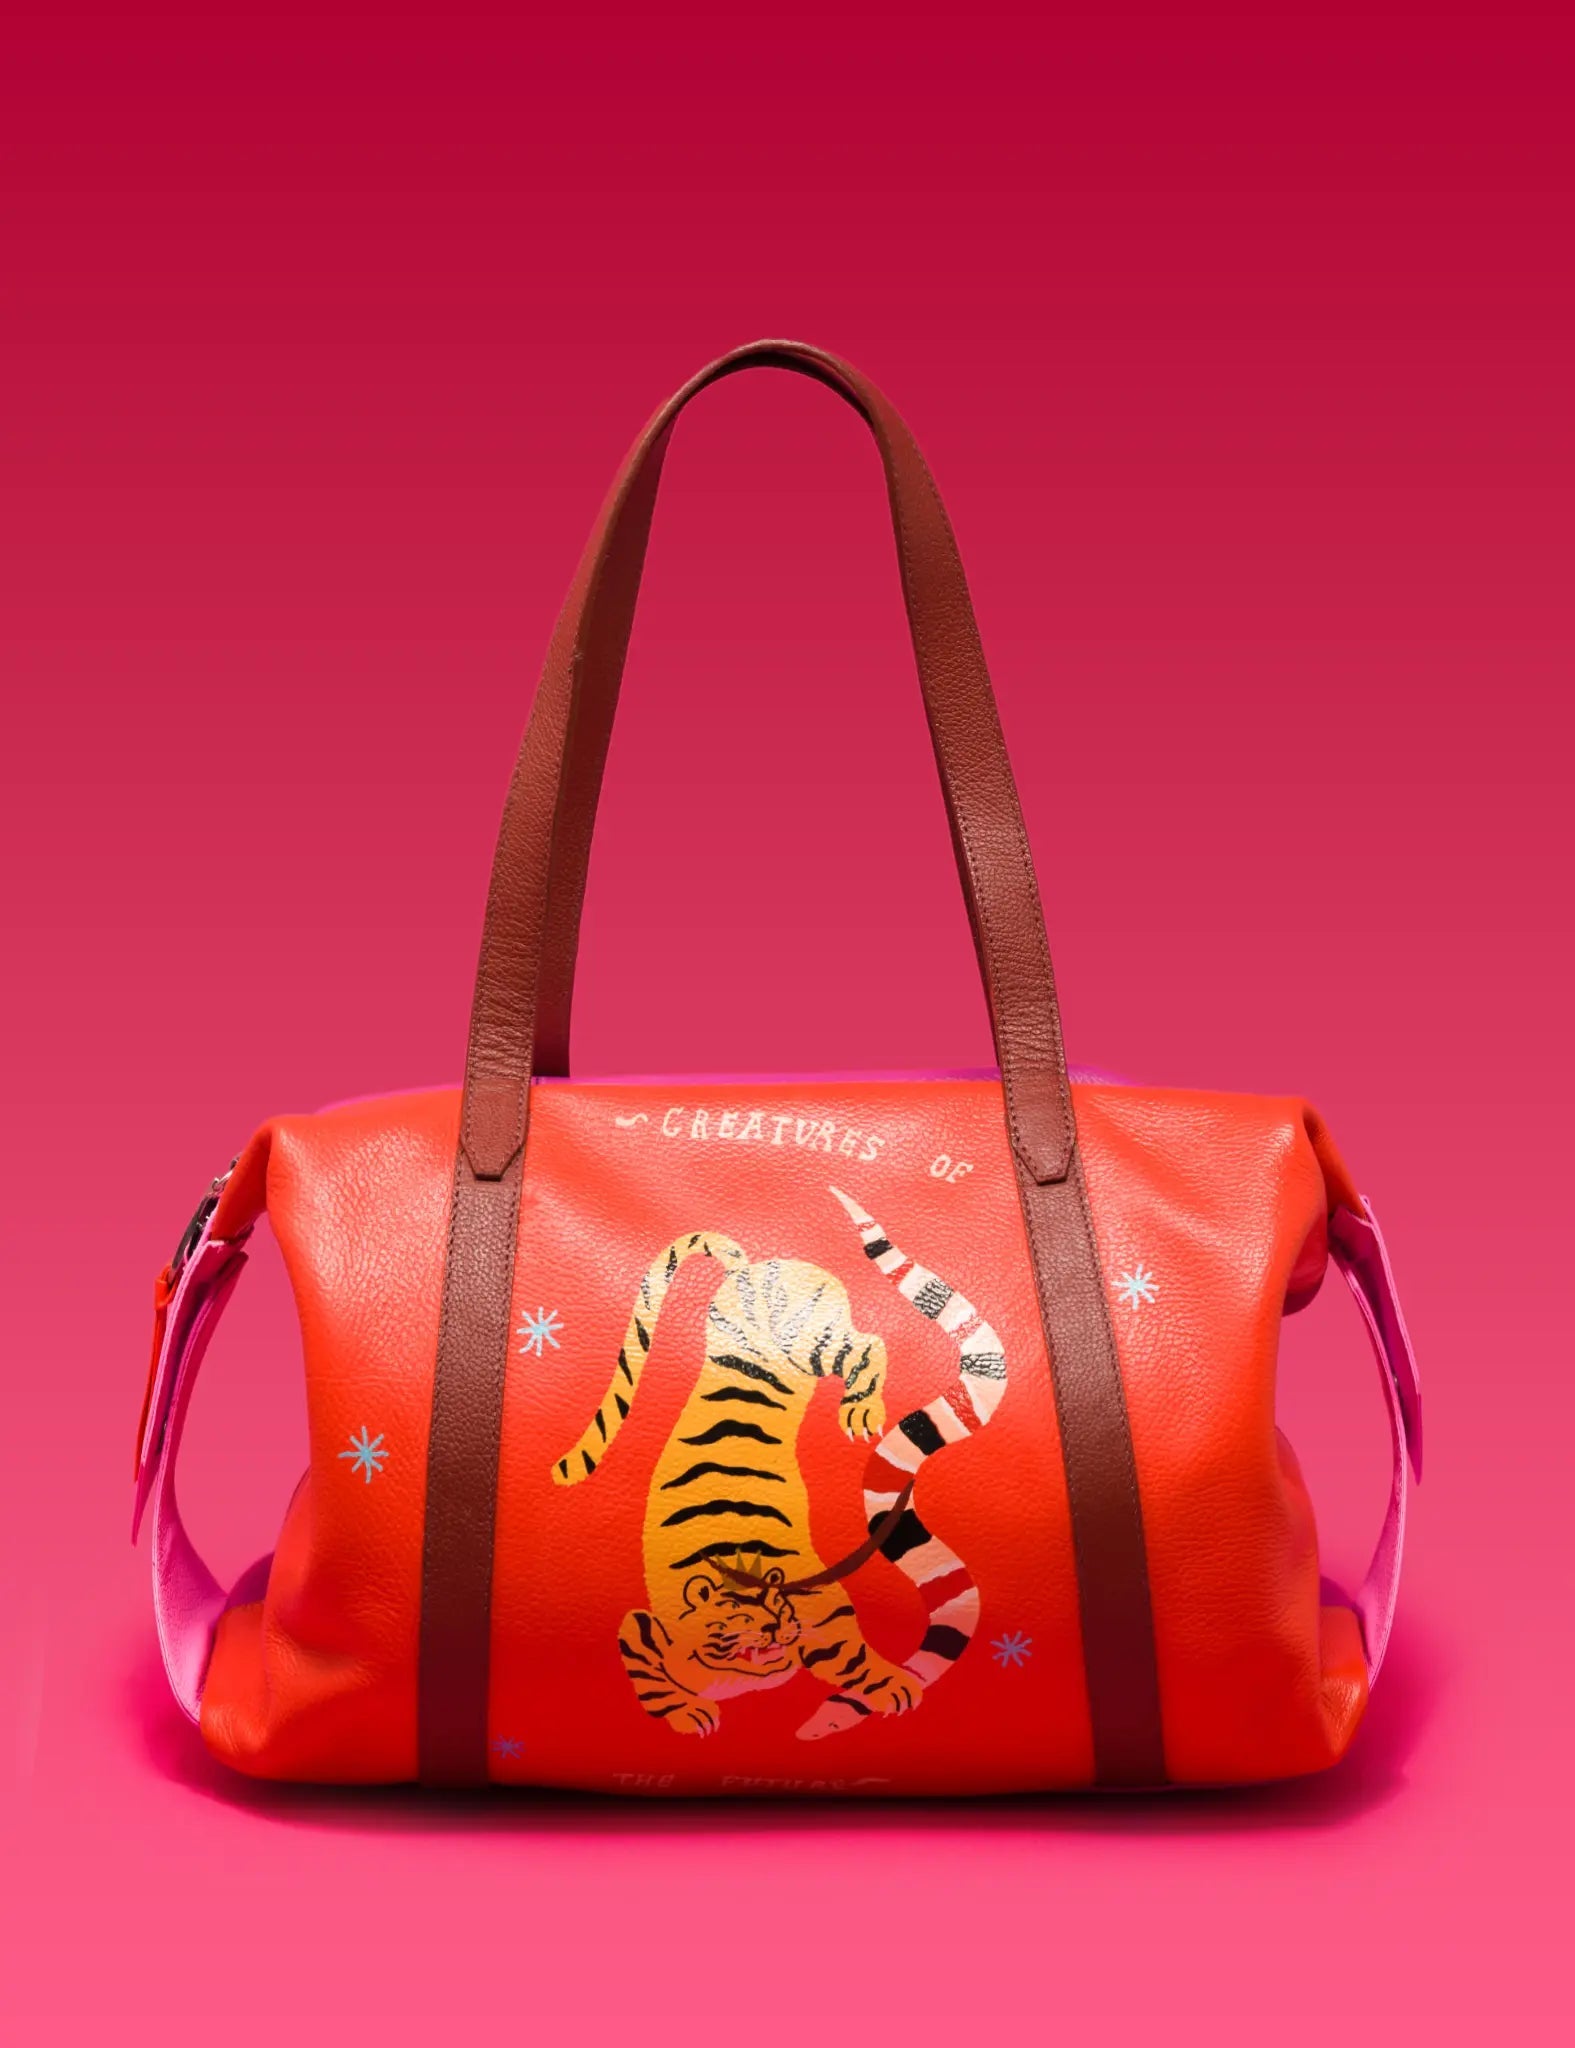 Ilan Duffle Bag - Fiesta Red Tiger Print - Front view